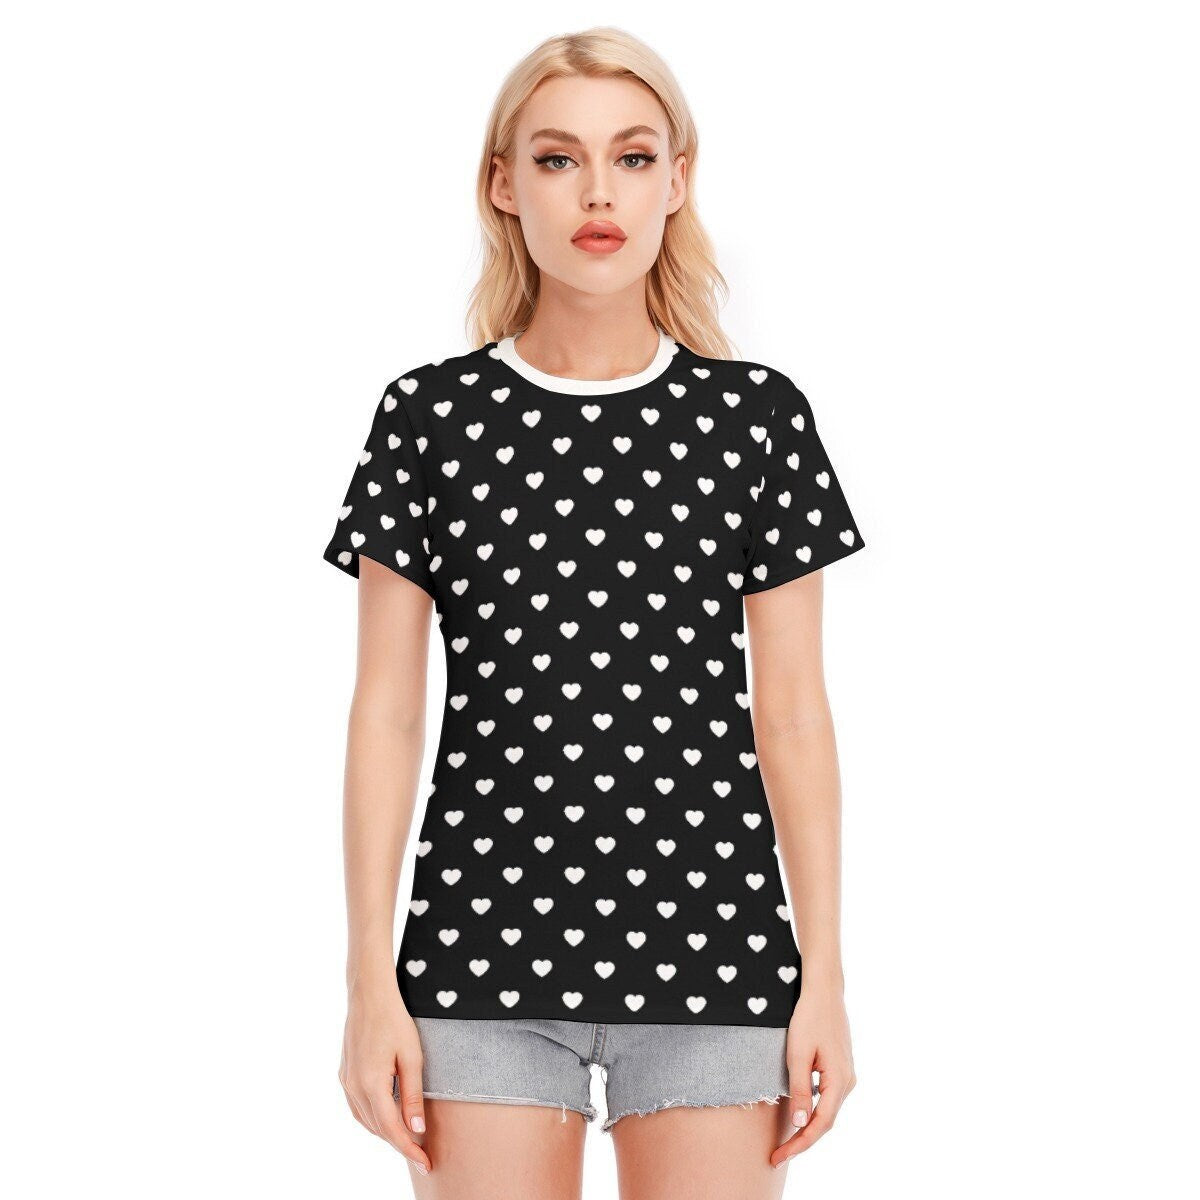 Damen-T-Shirt, Herz-Polka-Dot-Top, Polka-Dot-T-Shirt, schwarzes Polka-Dot-Top, Retro-T-Shirt, Herz-Print-T-Shirt, Herz-Muster-T-Shirt